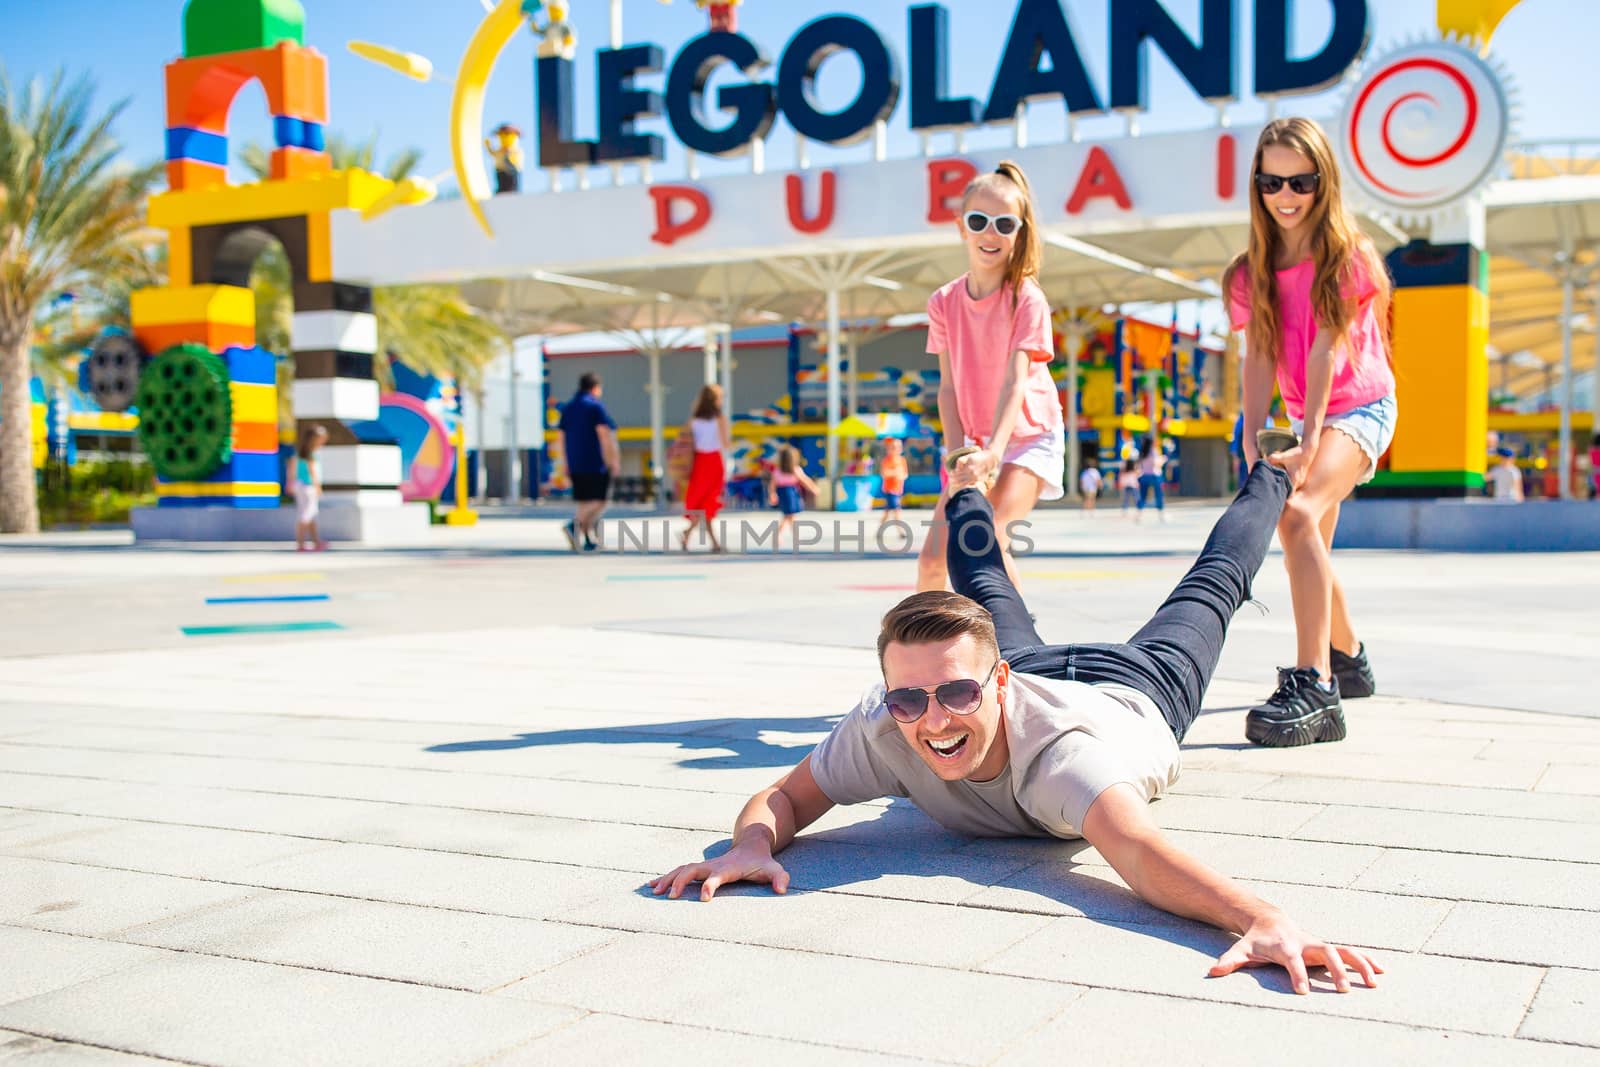 Dubai Legoland at Dubai Parks and Resorts,Dubai, United Arab Emirates by travnikovstudio